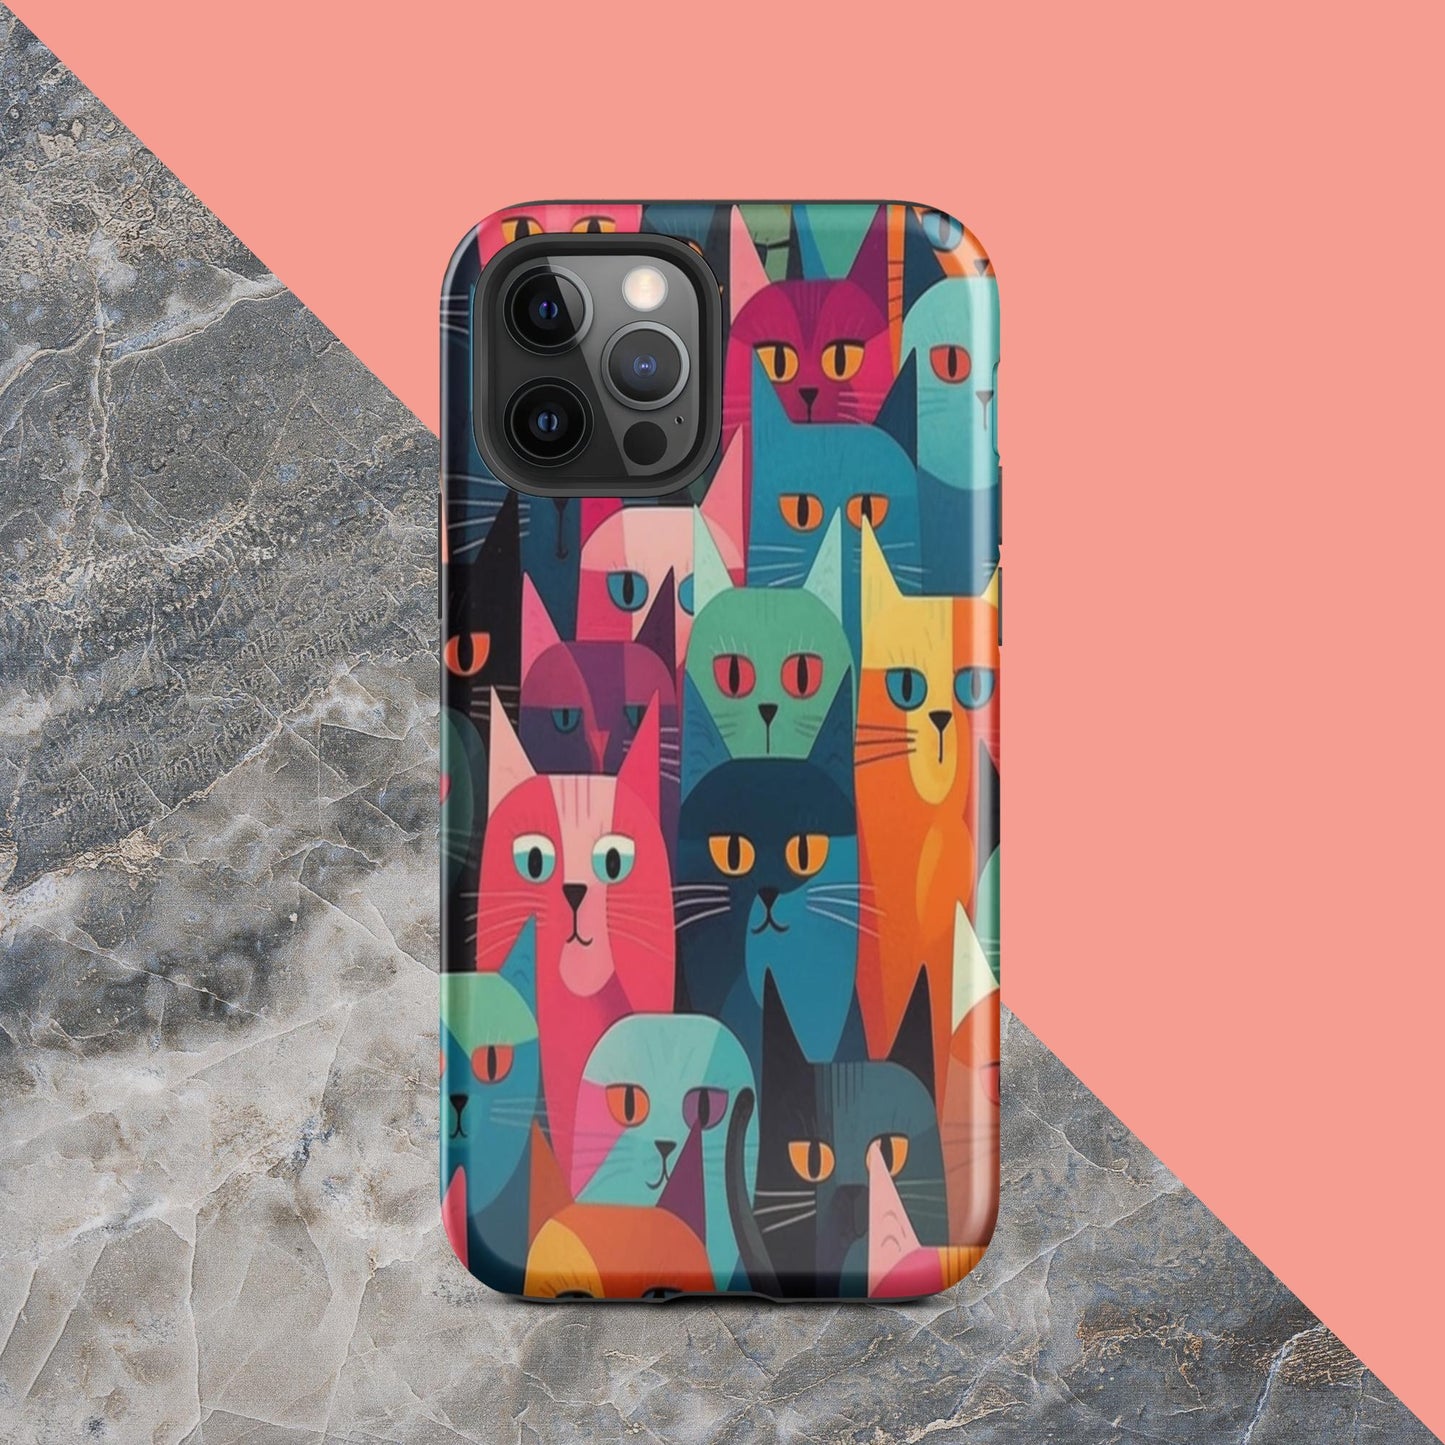 Cat Lady Tough Case, Shockproof Phone Case,Cool Designed Phone Cases, Pocket-friendly